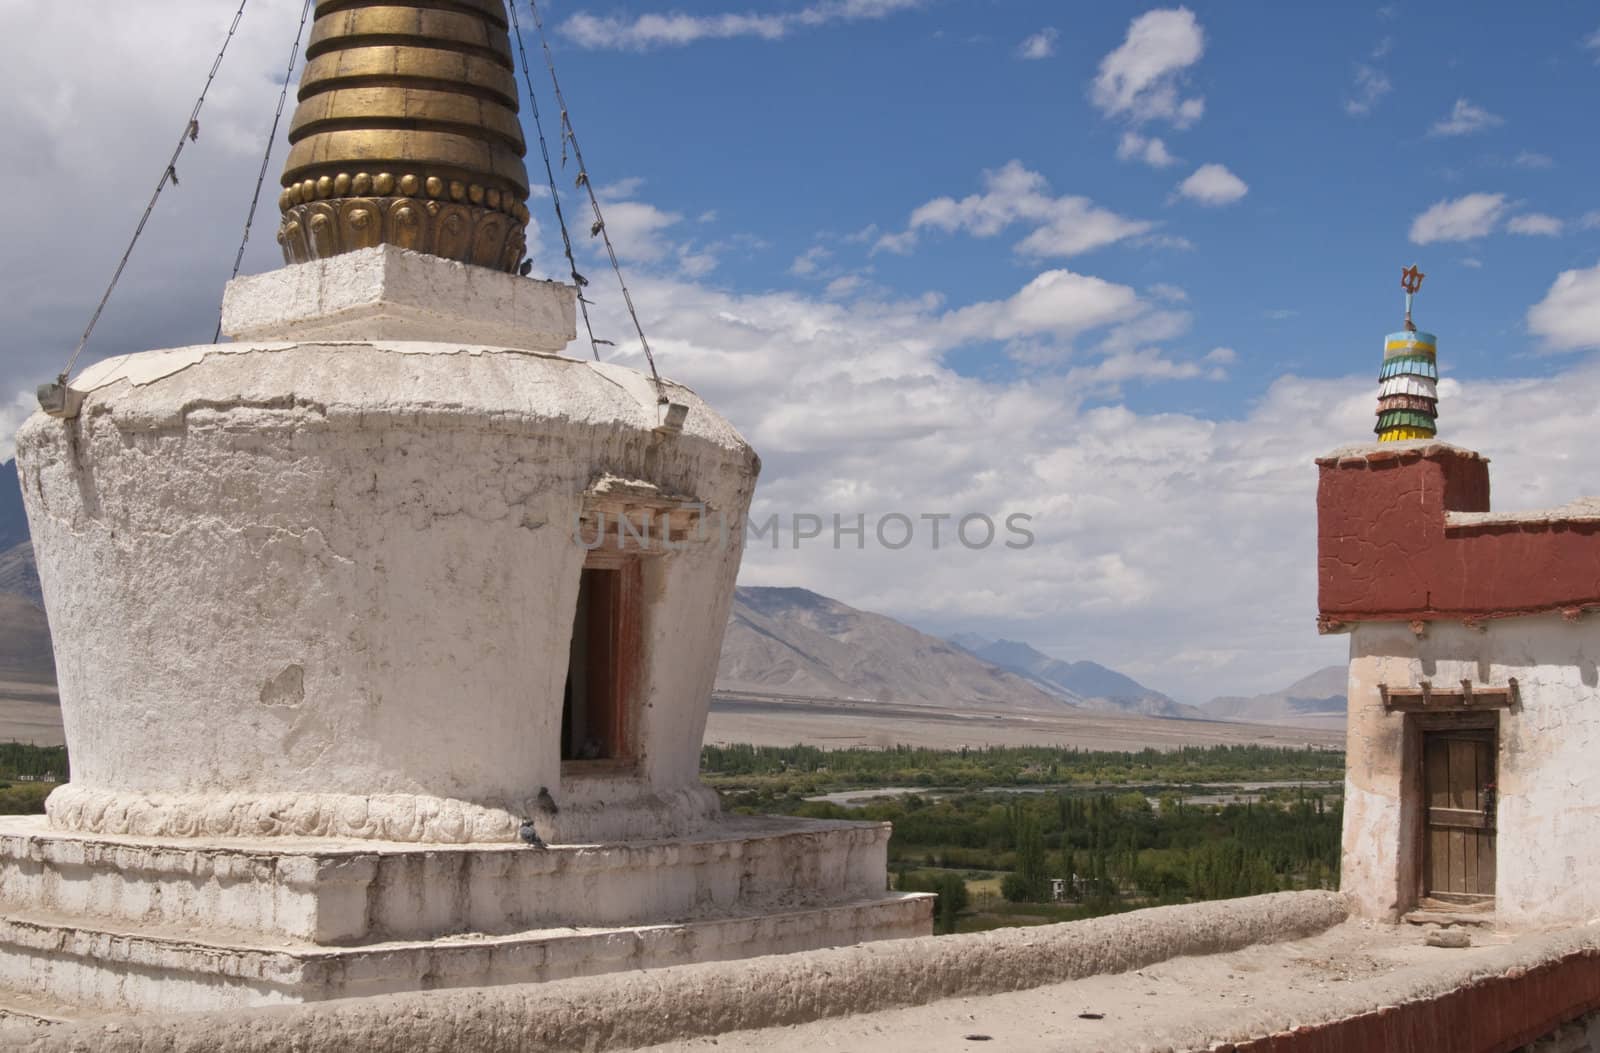 Buddhist temple and stupa at Shey monastery, Ladakh, India